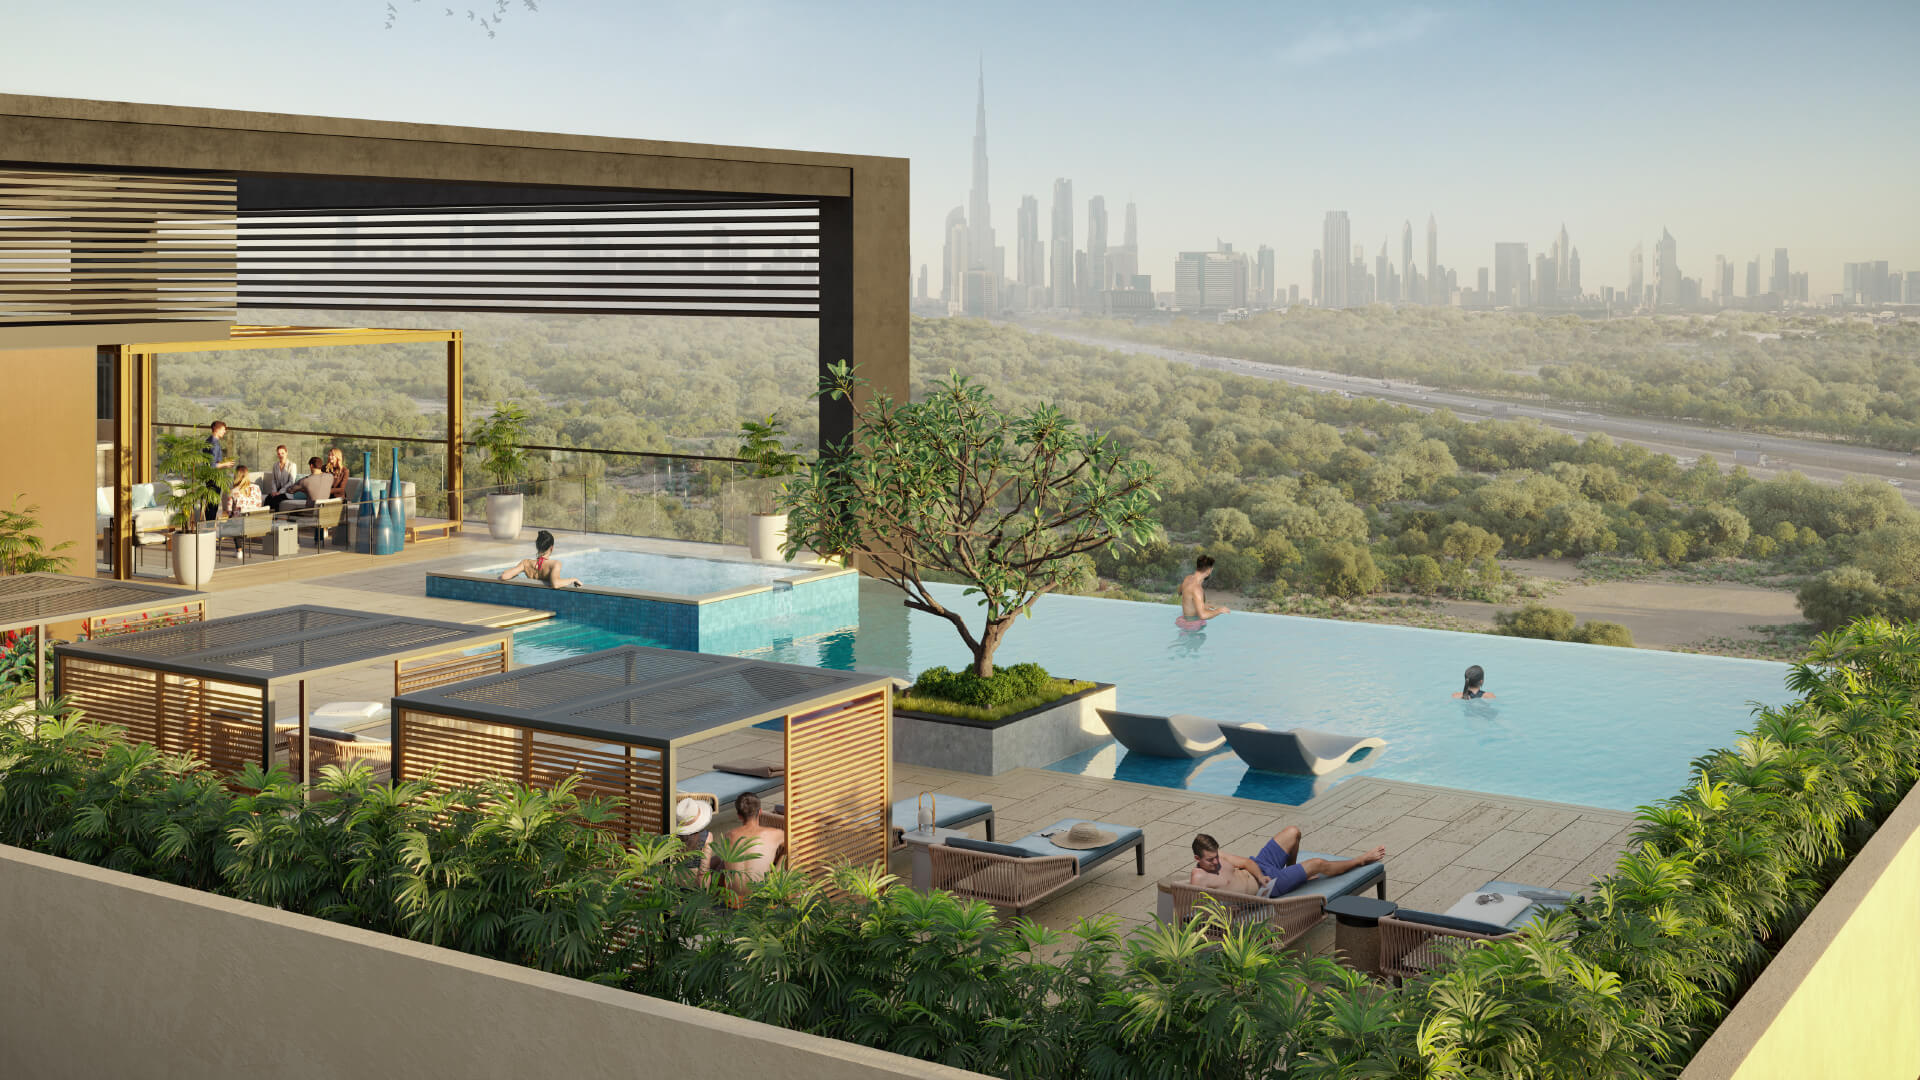 Berkeley Place in Meydan City, Dubai by Elington